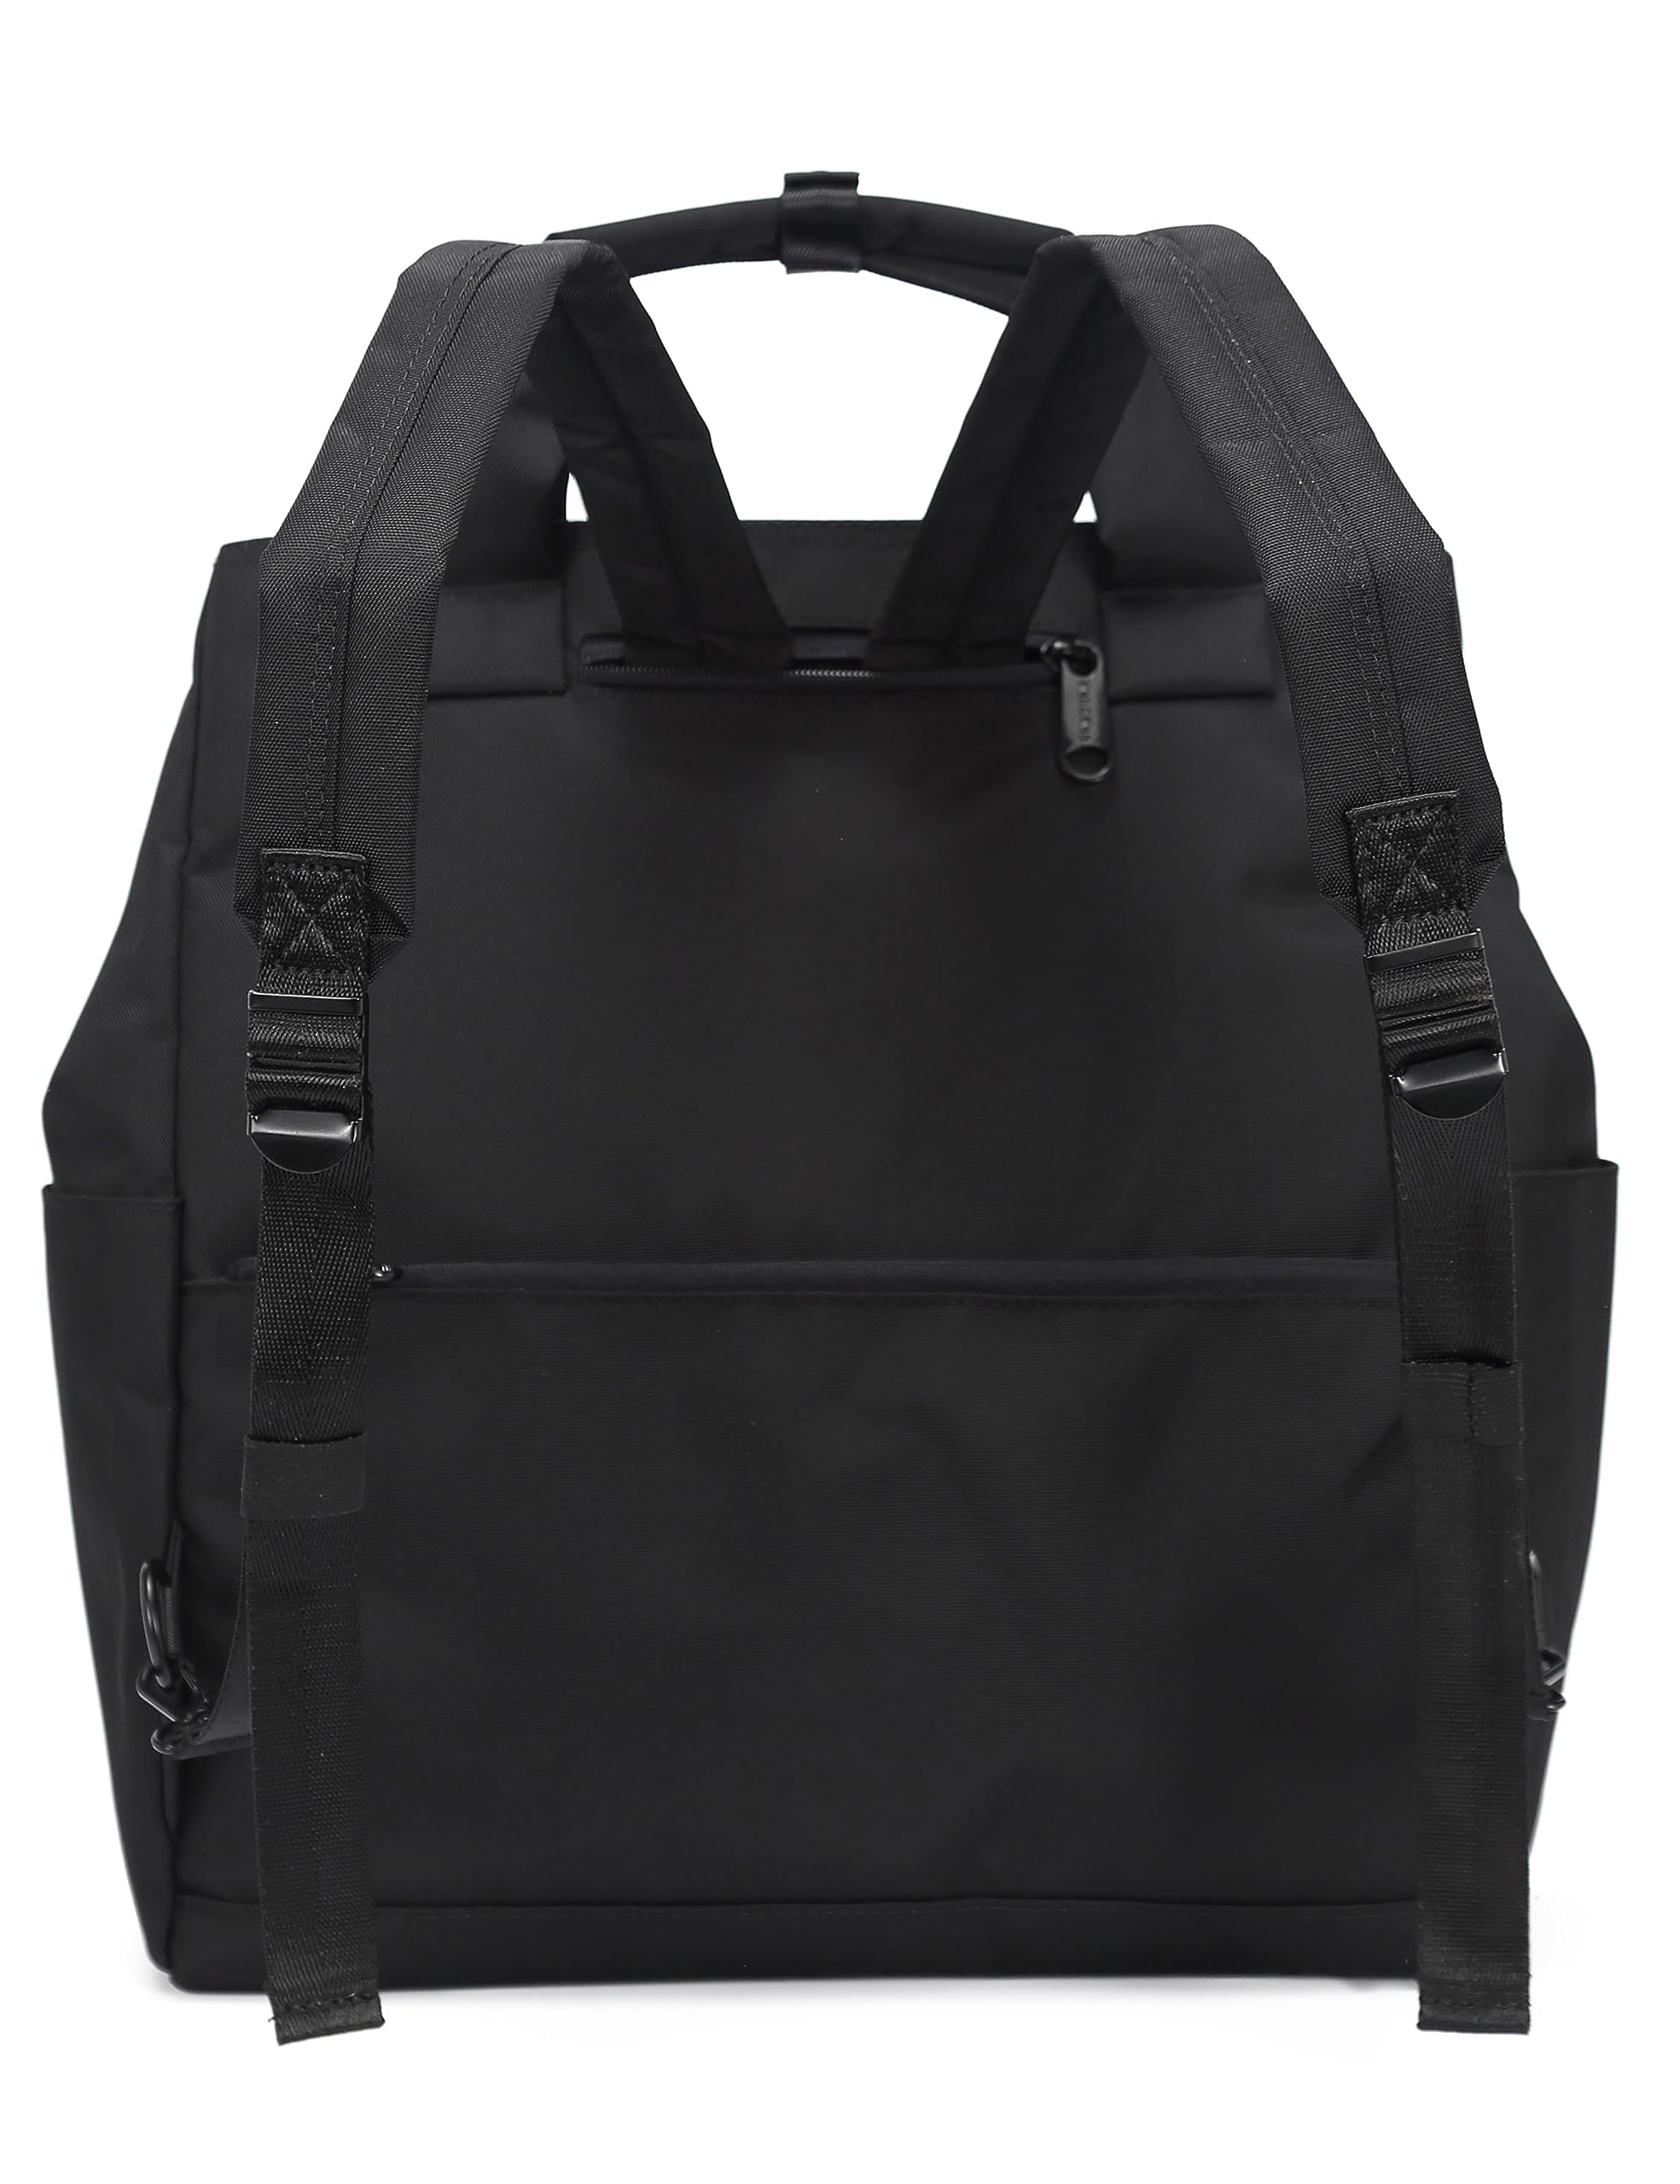 Kah&Kee Backpack Purse for Women Convertible -14 inch Laptop Tote Shoulder Bag. Ideal for Work, College, Travel & Nurses (Black)